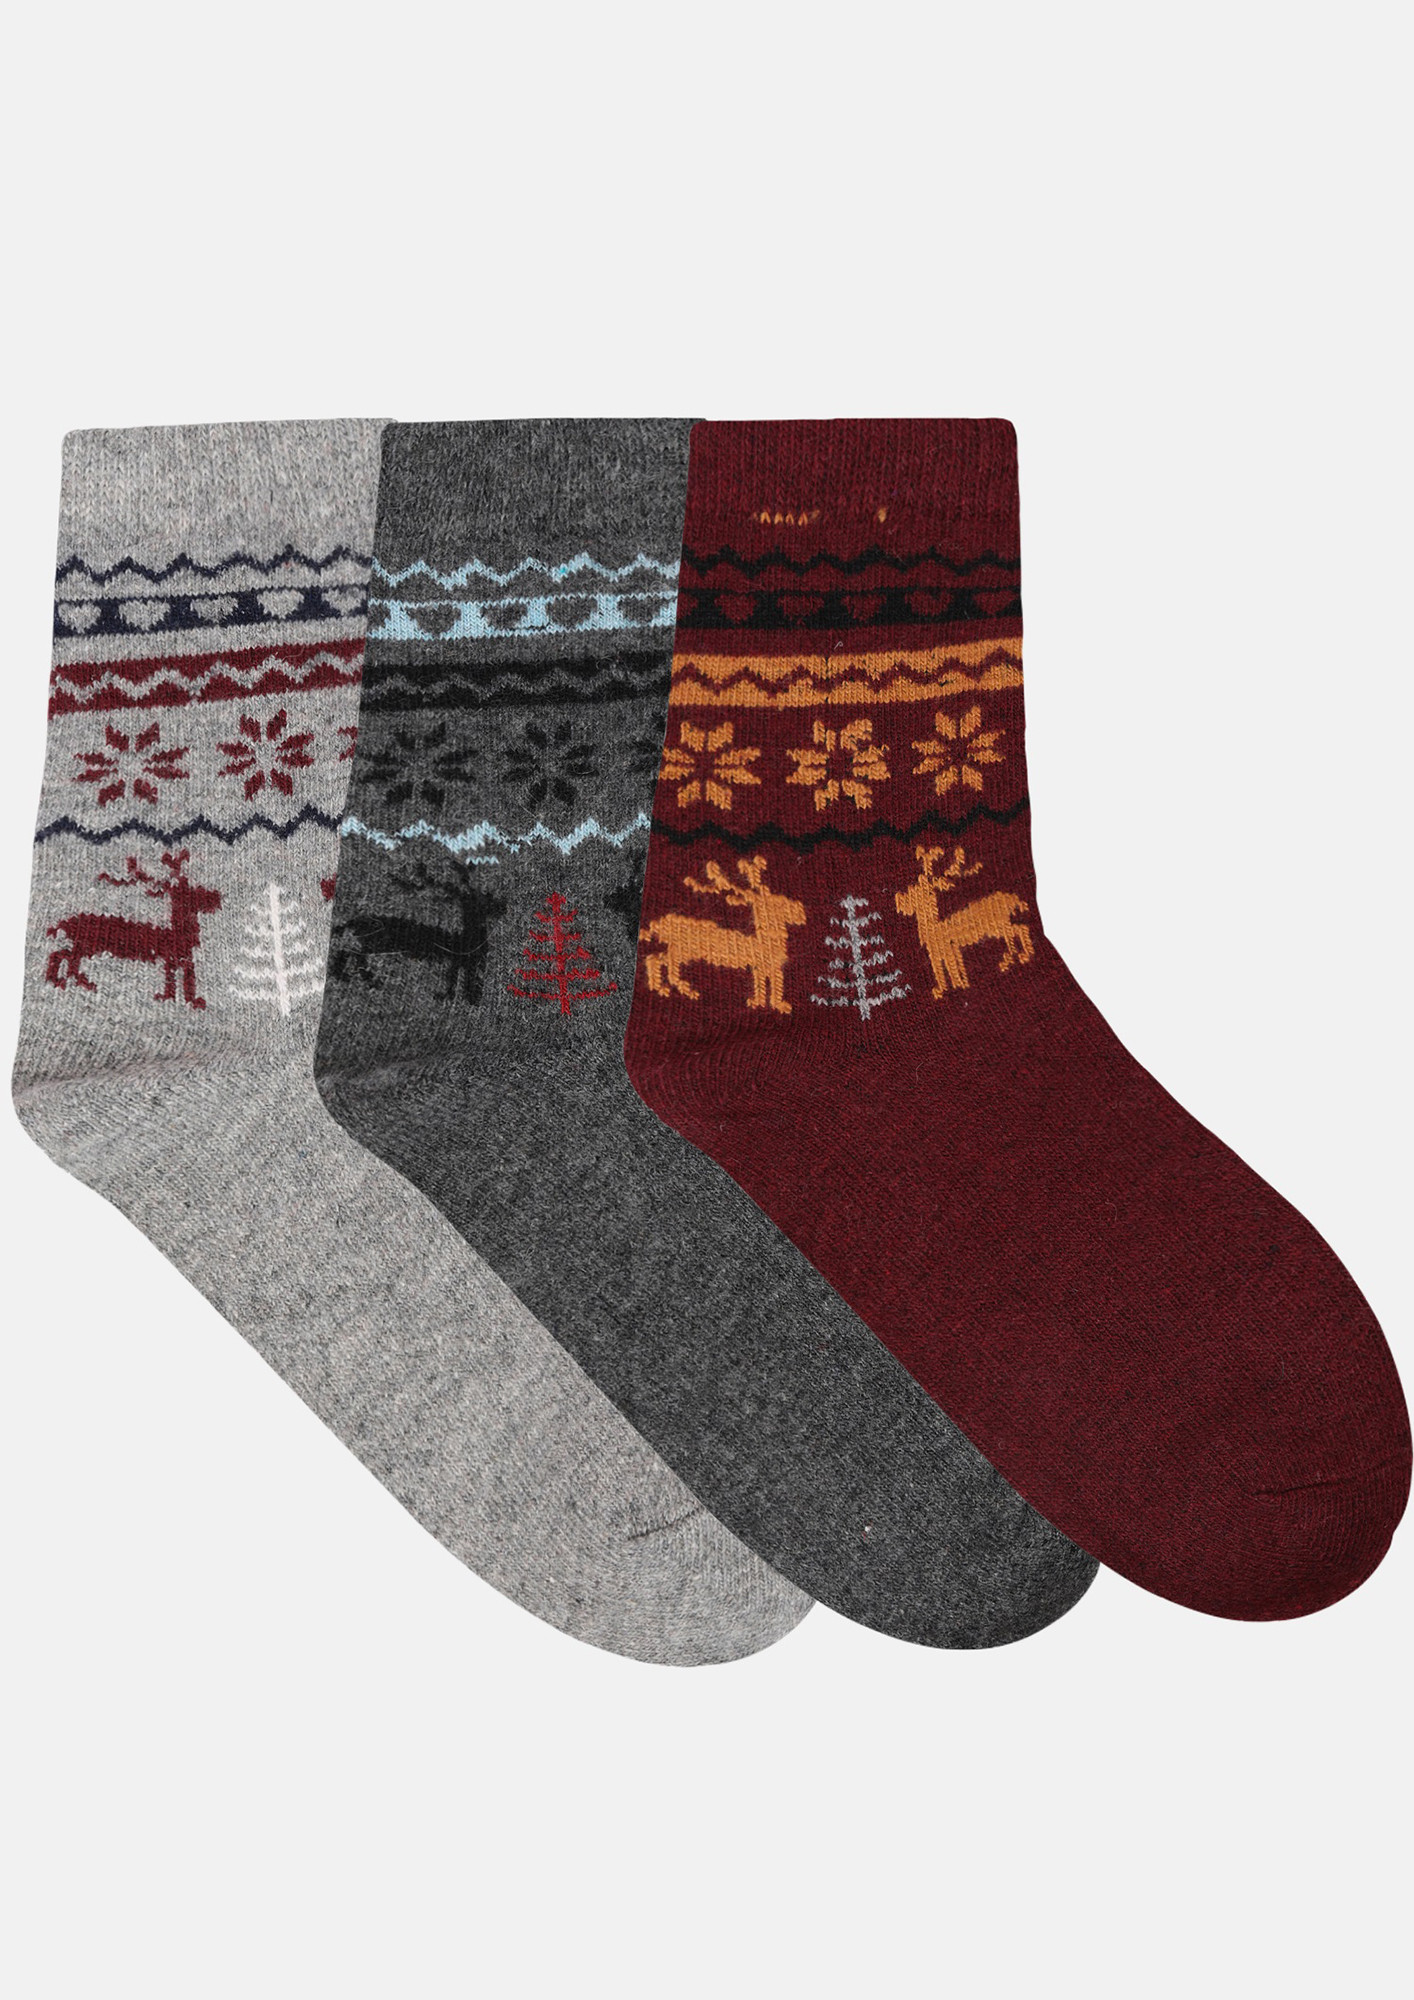 NEXT2SKIN Women's Woollen Regular length Socks (Pack of 3) (Light Grey,Dark Grey,Red)